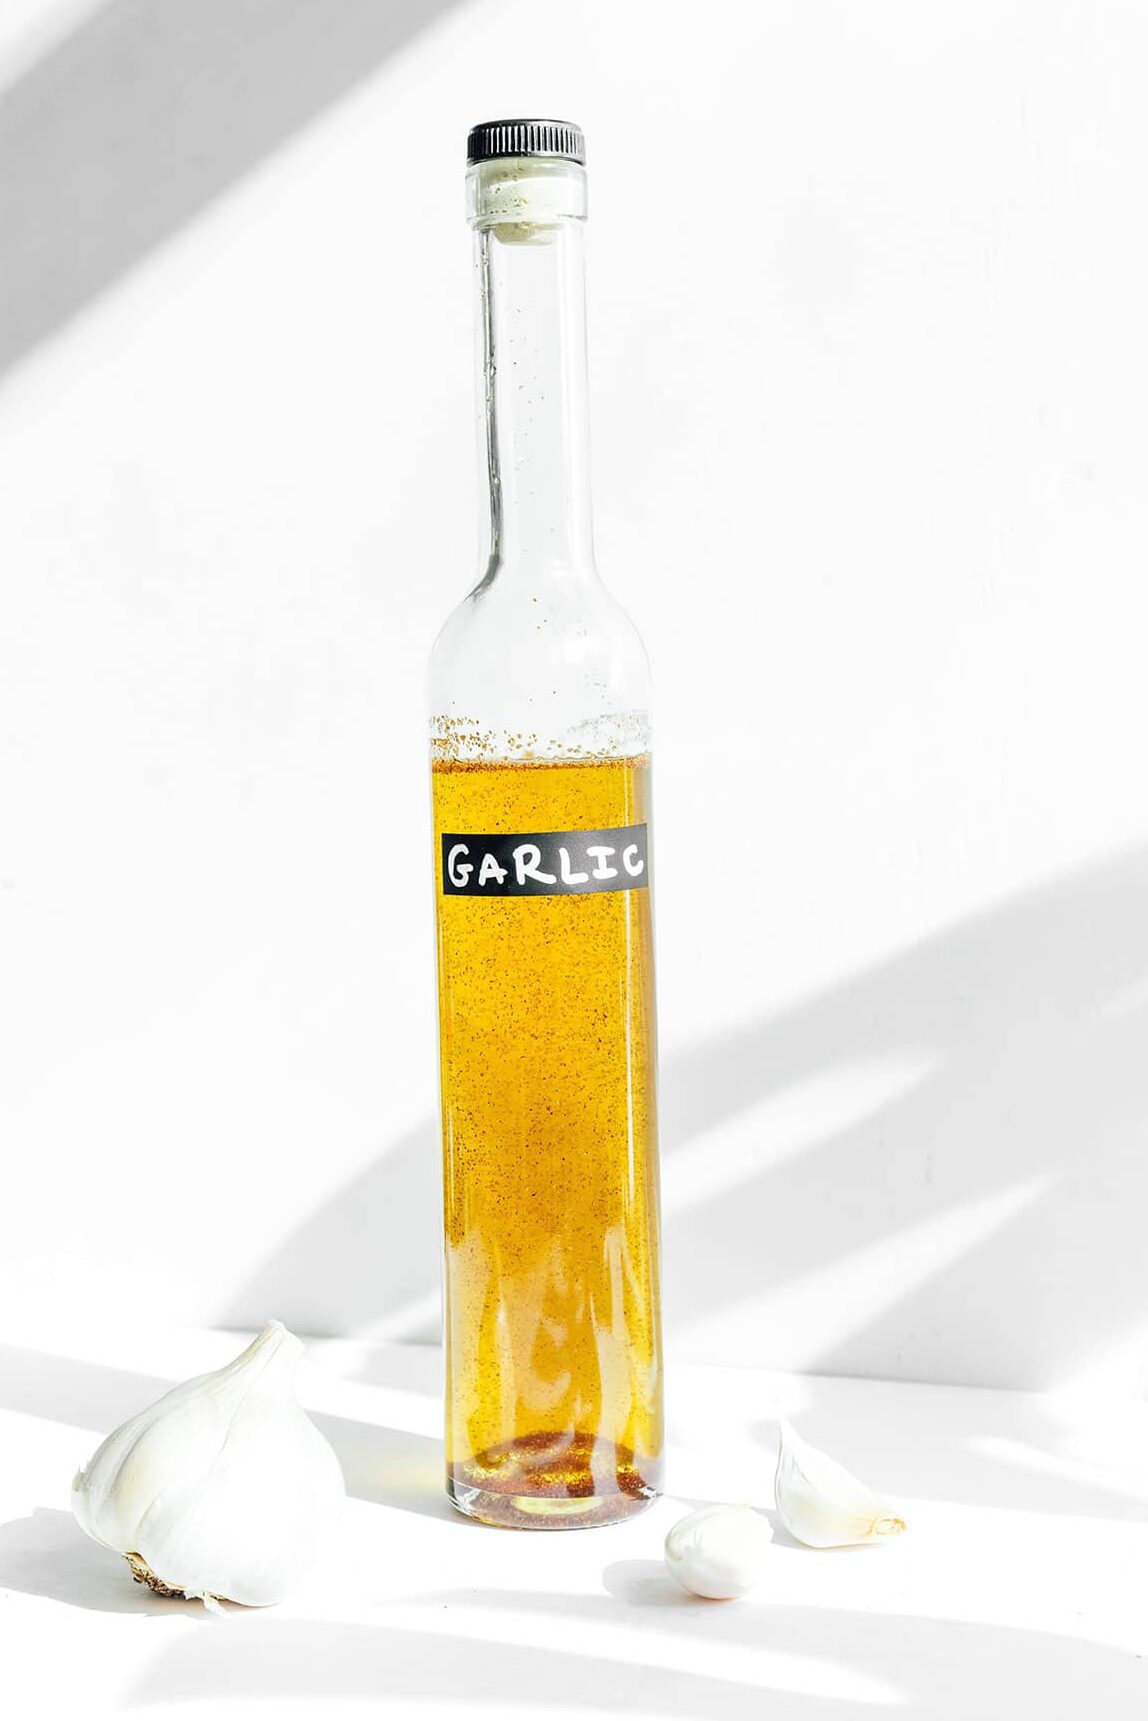 A bottle of garlic infused olive oil